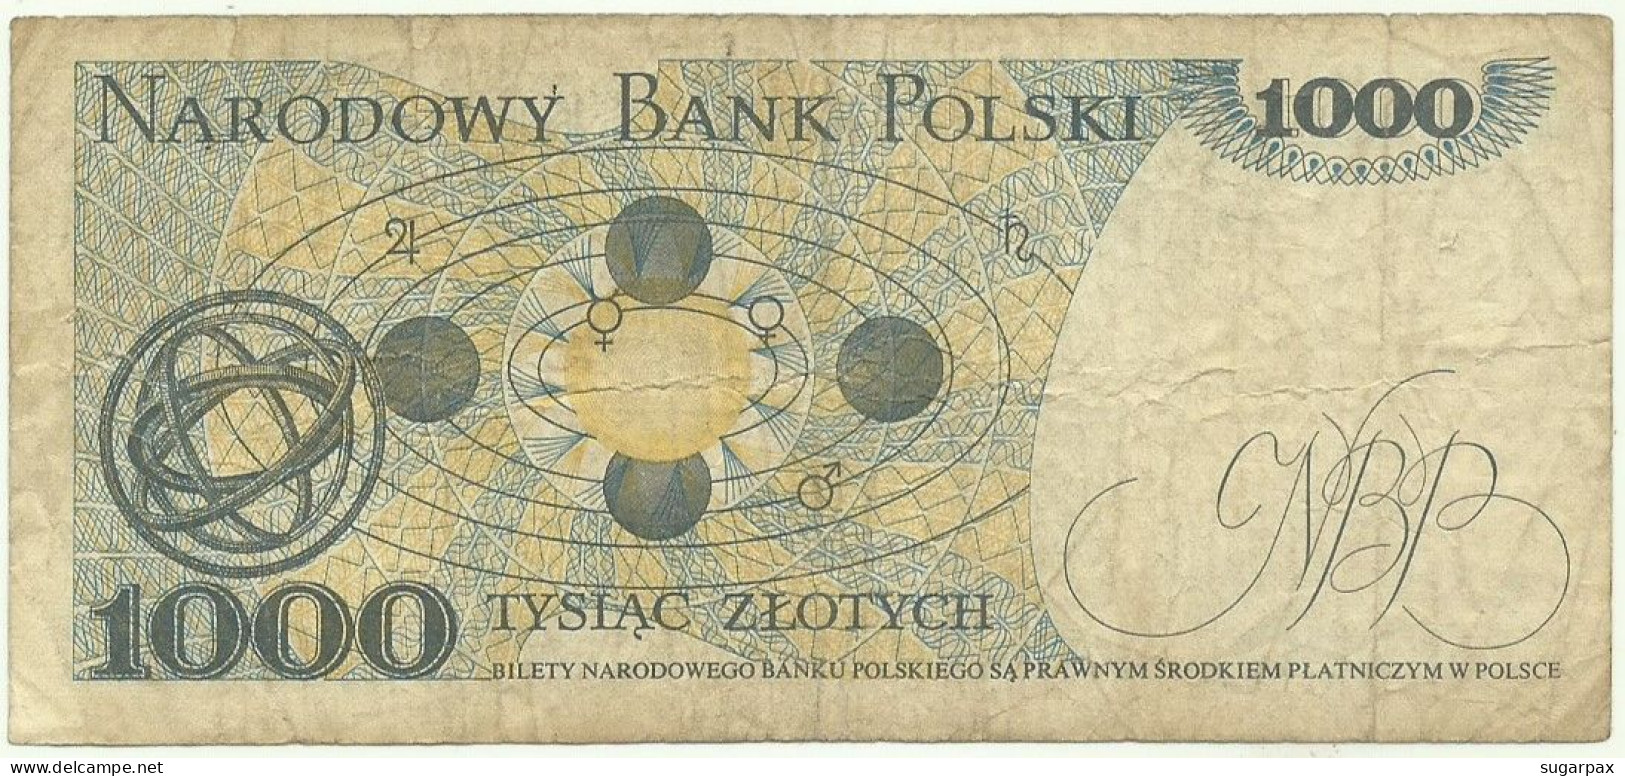 POLAND - 1000 Zlotych - 1982 - Pick 146.c - Série GC - Narodowy Bank Polski - 1.000 - Polonia